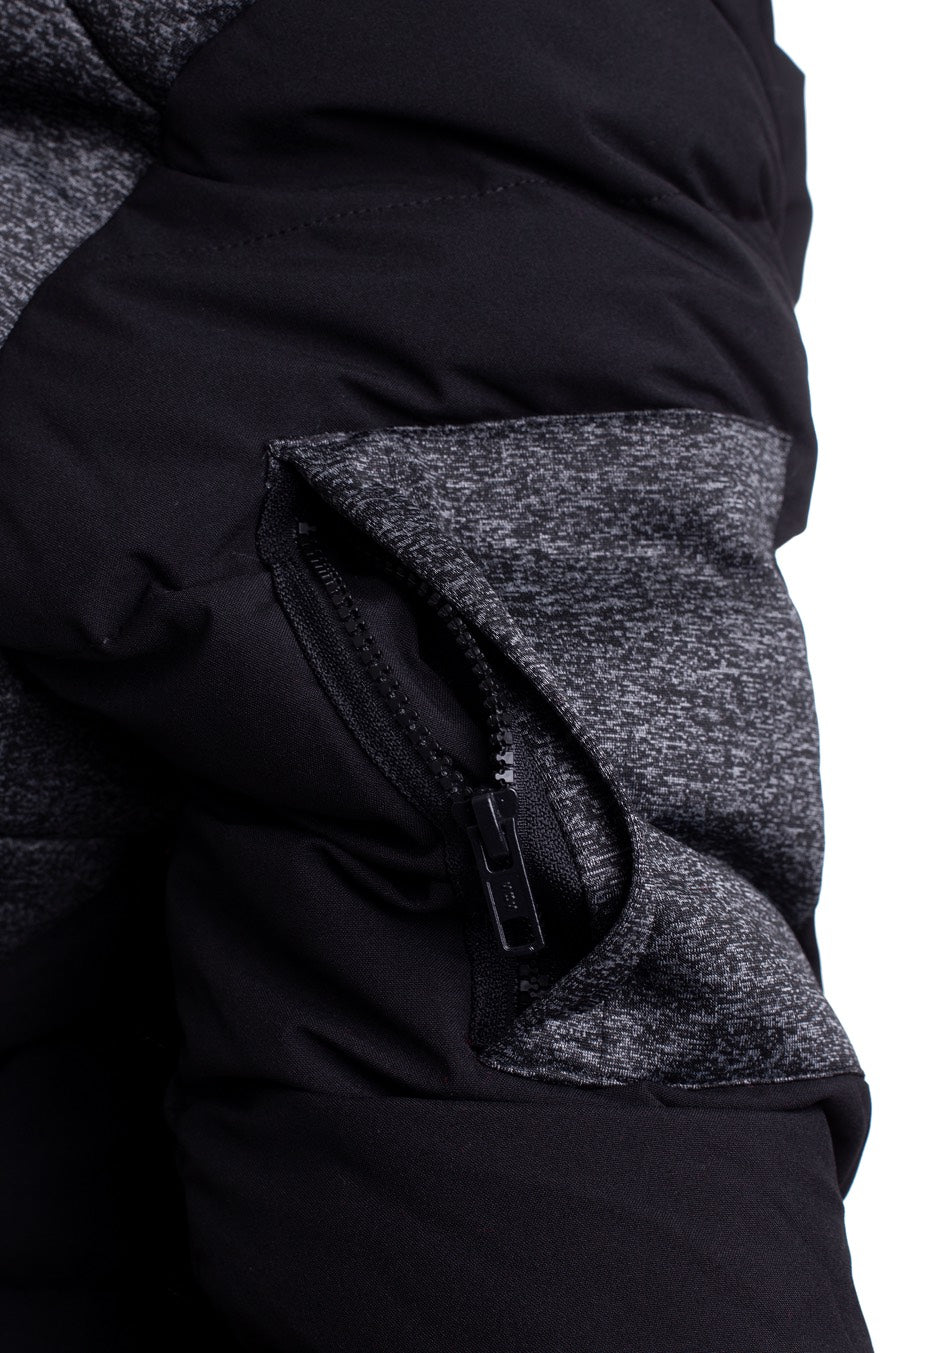 Urban Classics - Hooded Tech Bubble Black/Grey - Jacket